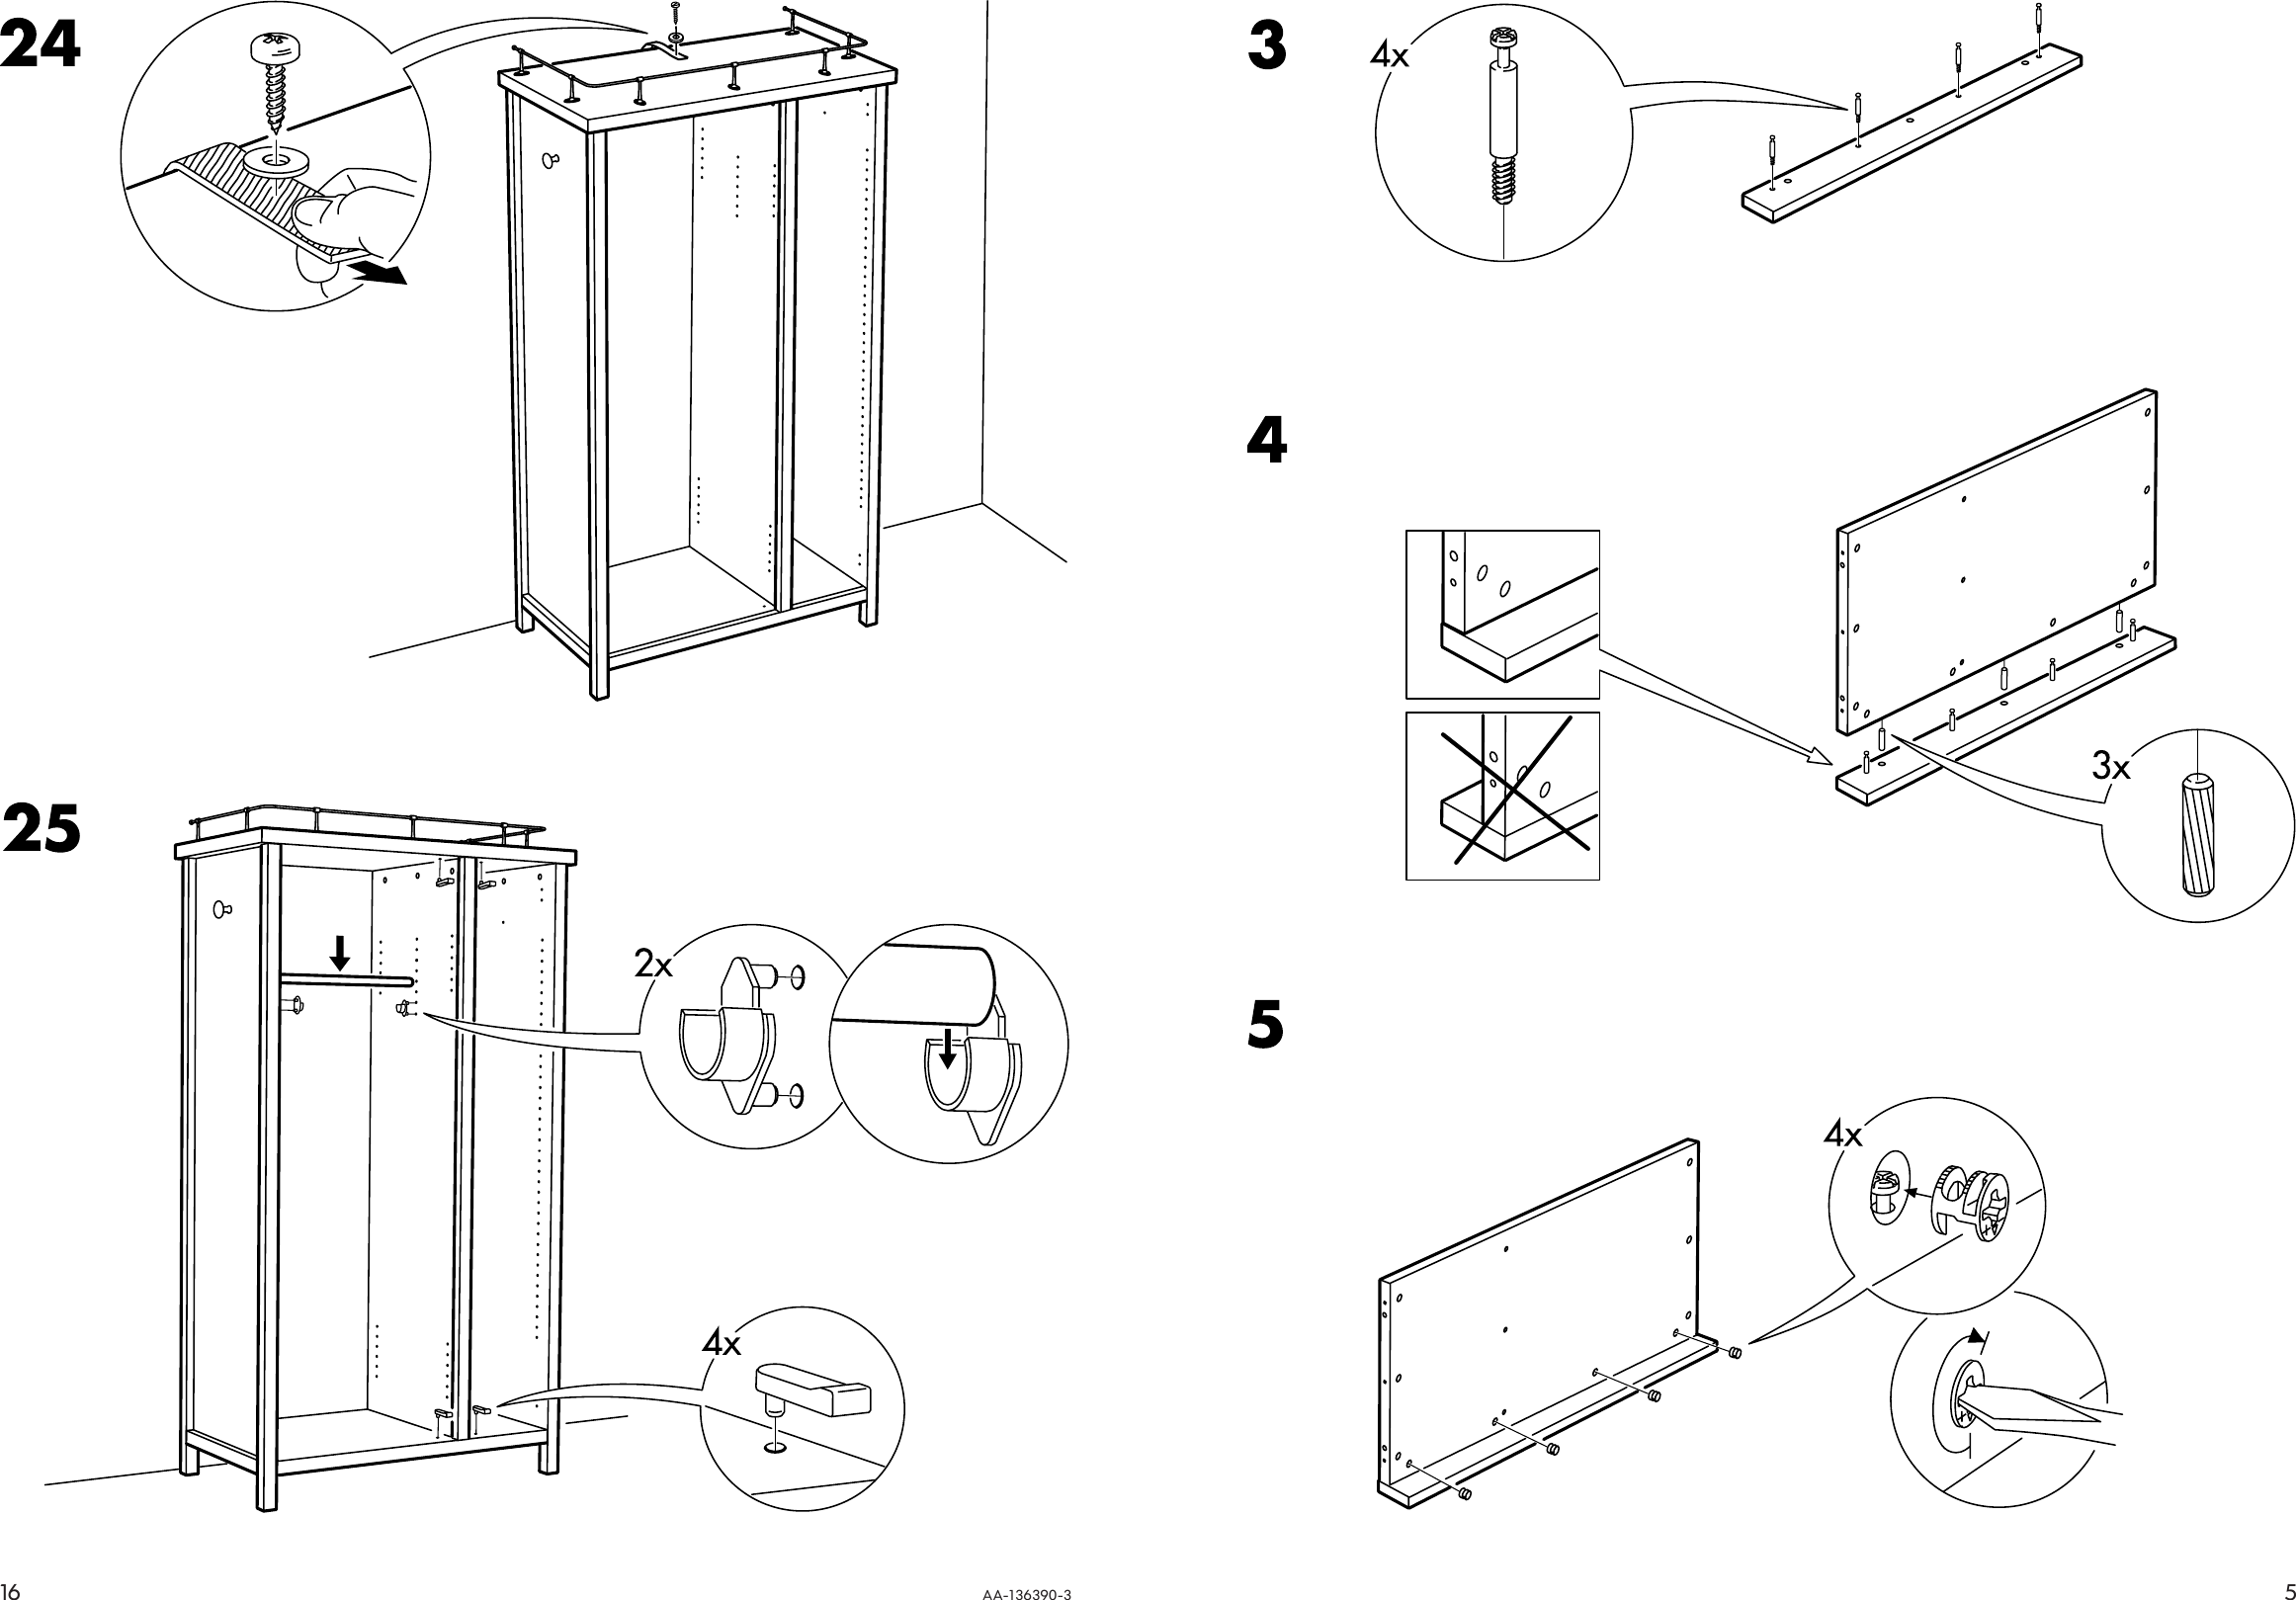 IkeaHemnesWardrobeAssemblyInstruction.744951913 User Guide Page 5 